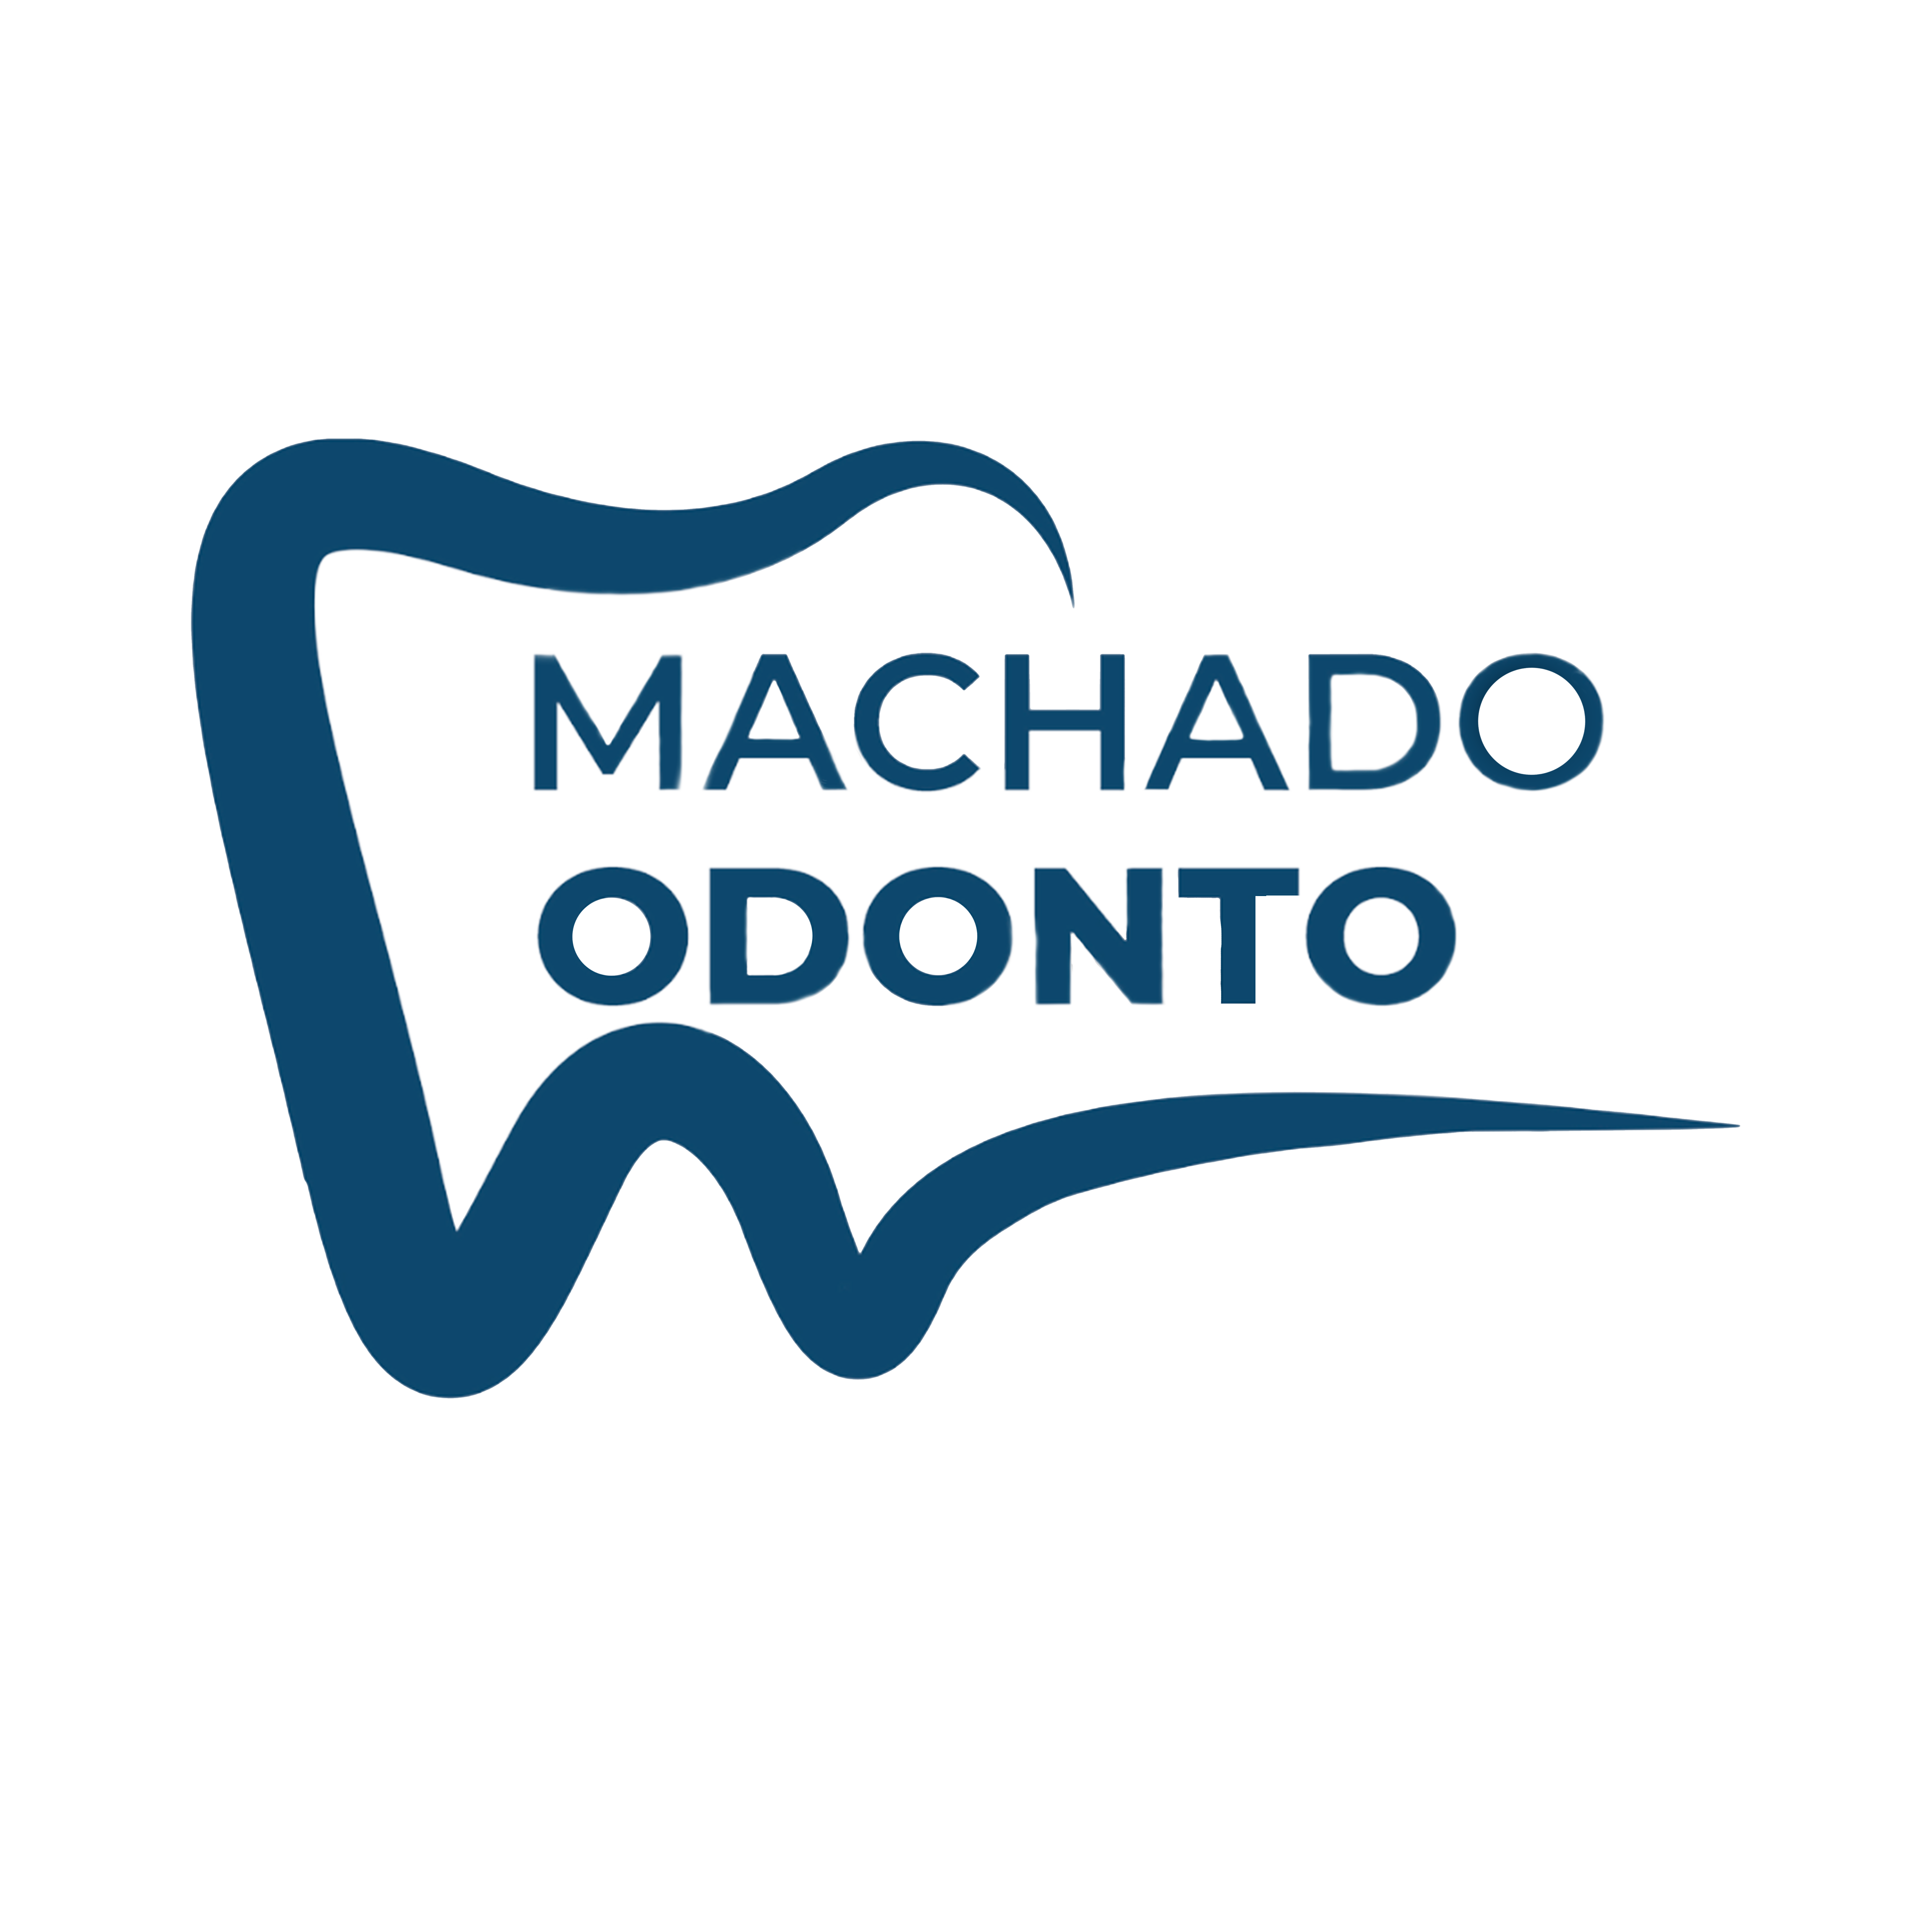 Machado-odonto-13.png